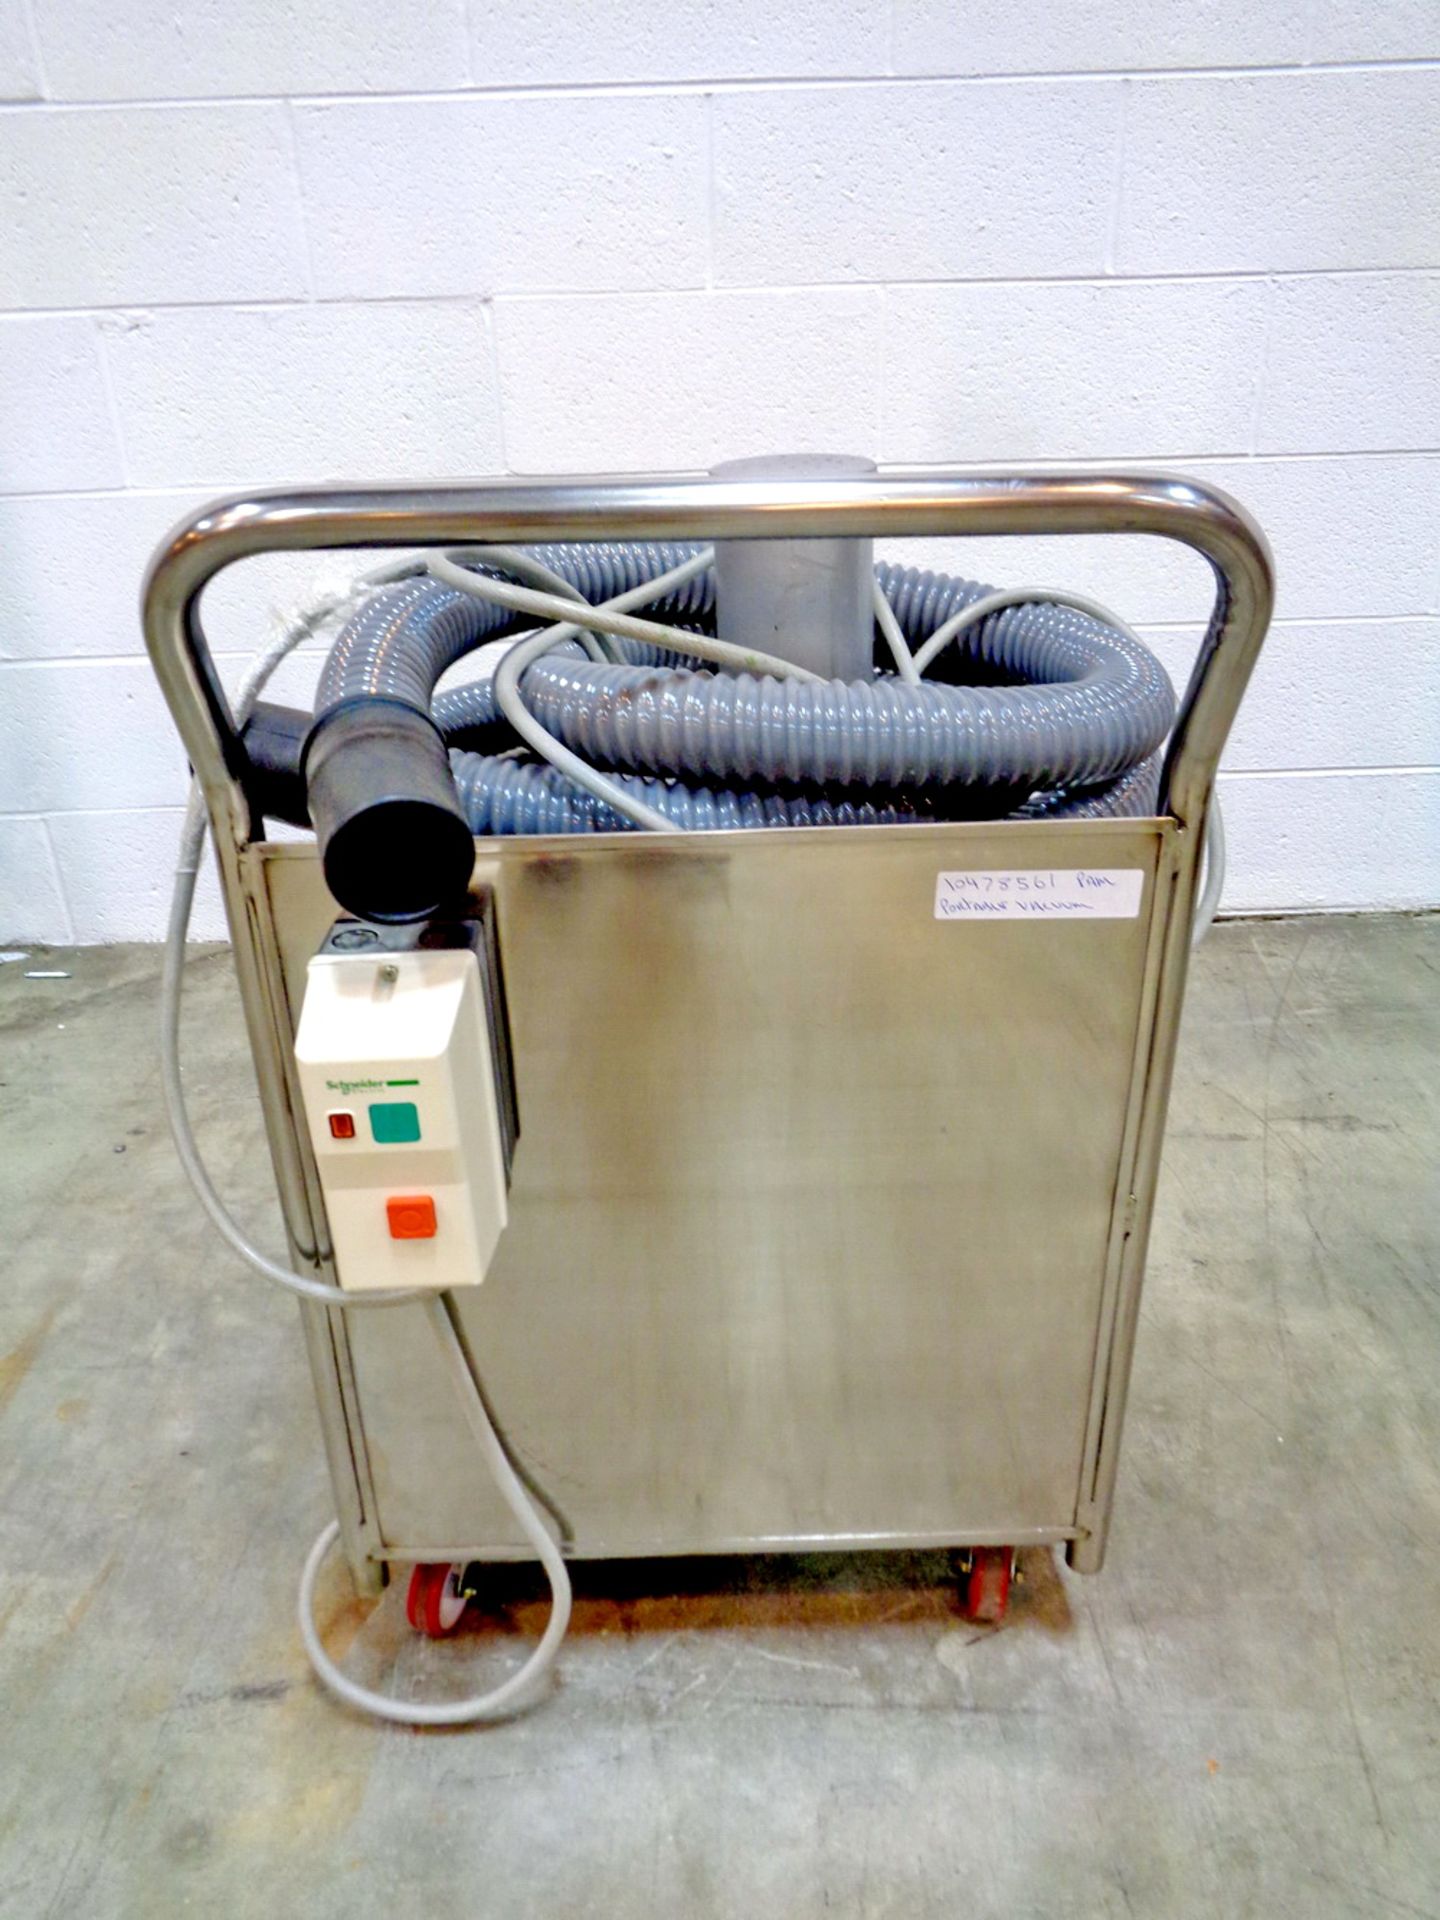 ACG PAM Stainless Steel Portable Cleaning Vacuum, Model OADU-815